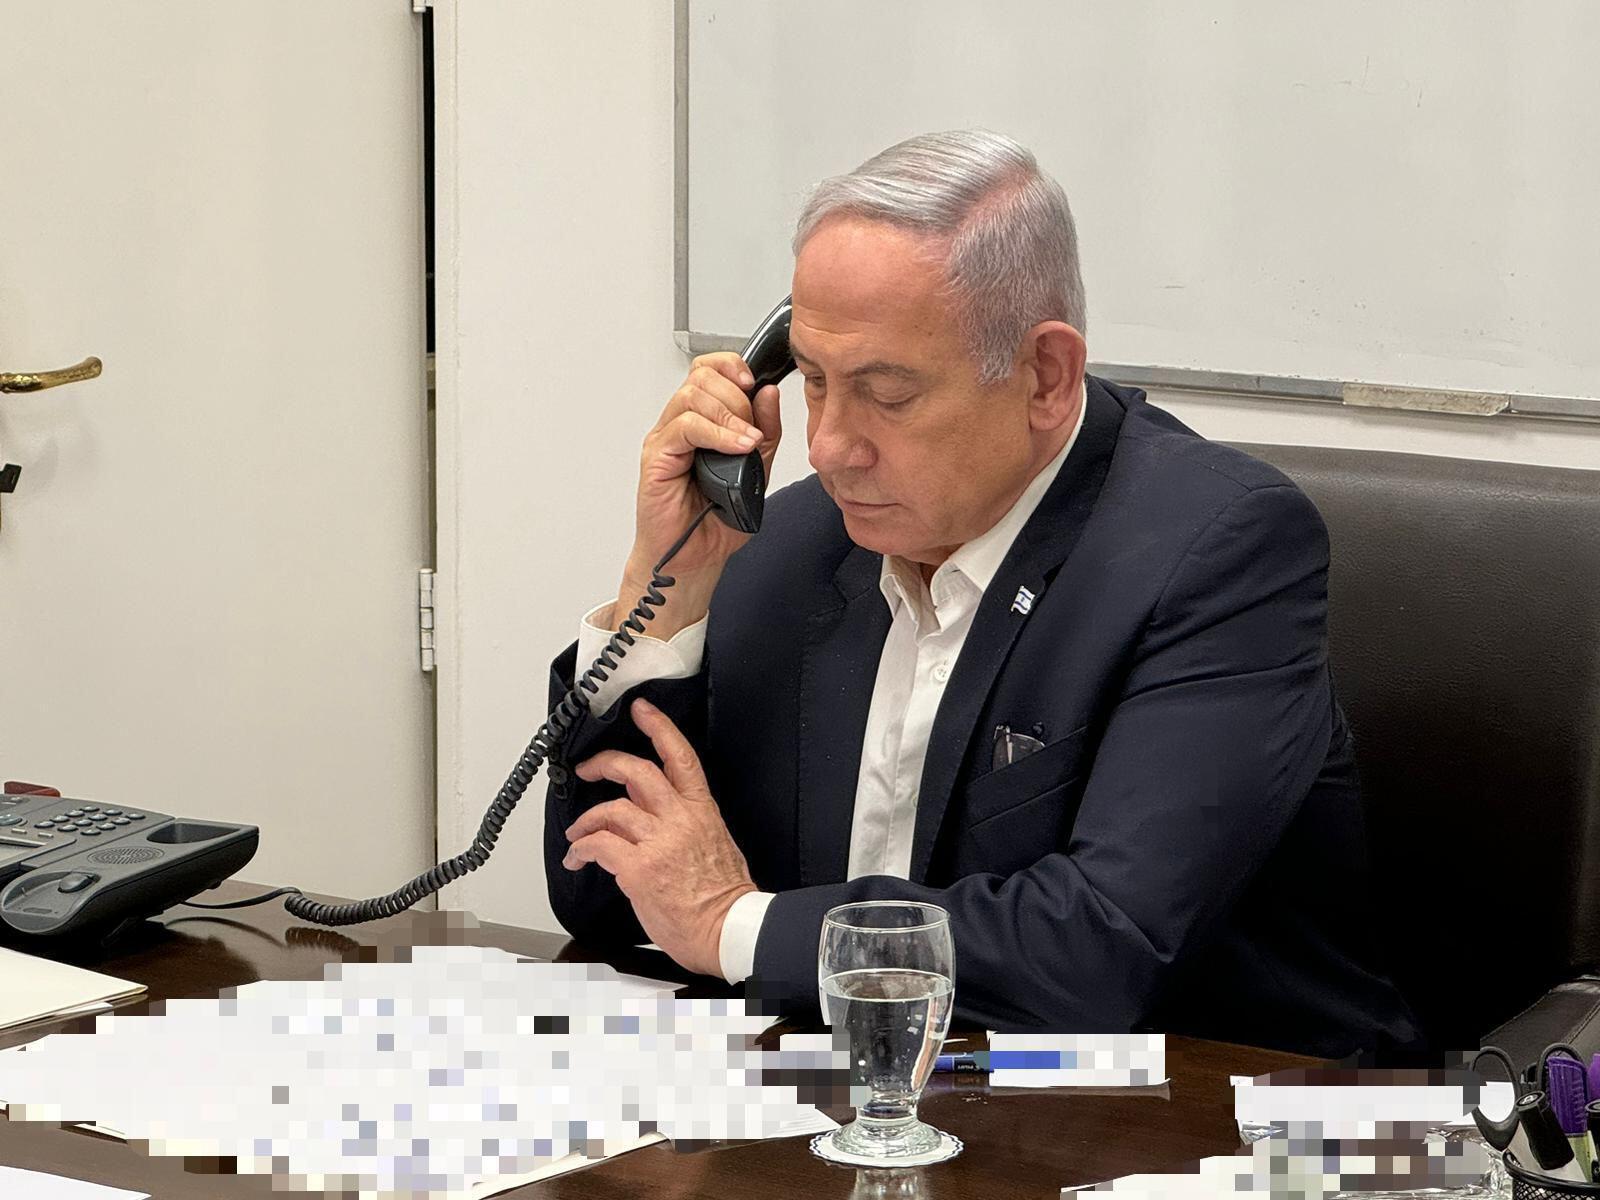 Analysts predict Israeli PM Benjamin Netanyahu will hit back hard